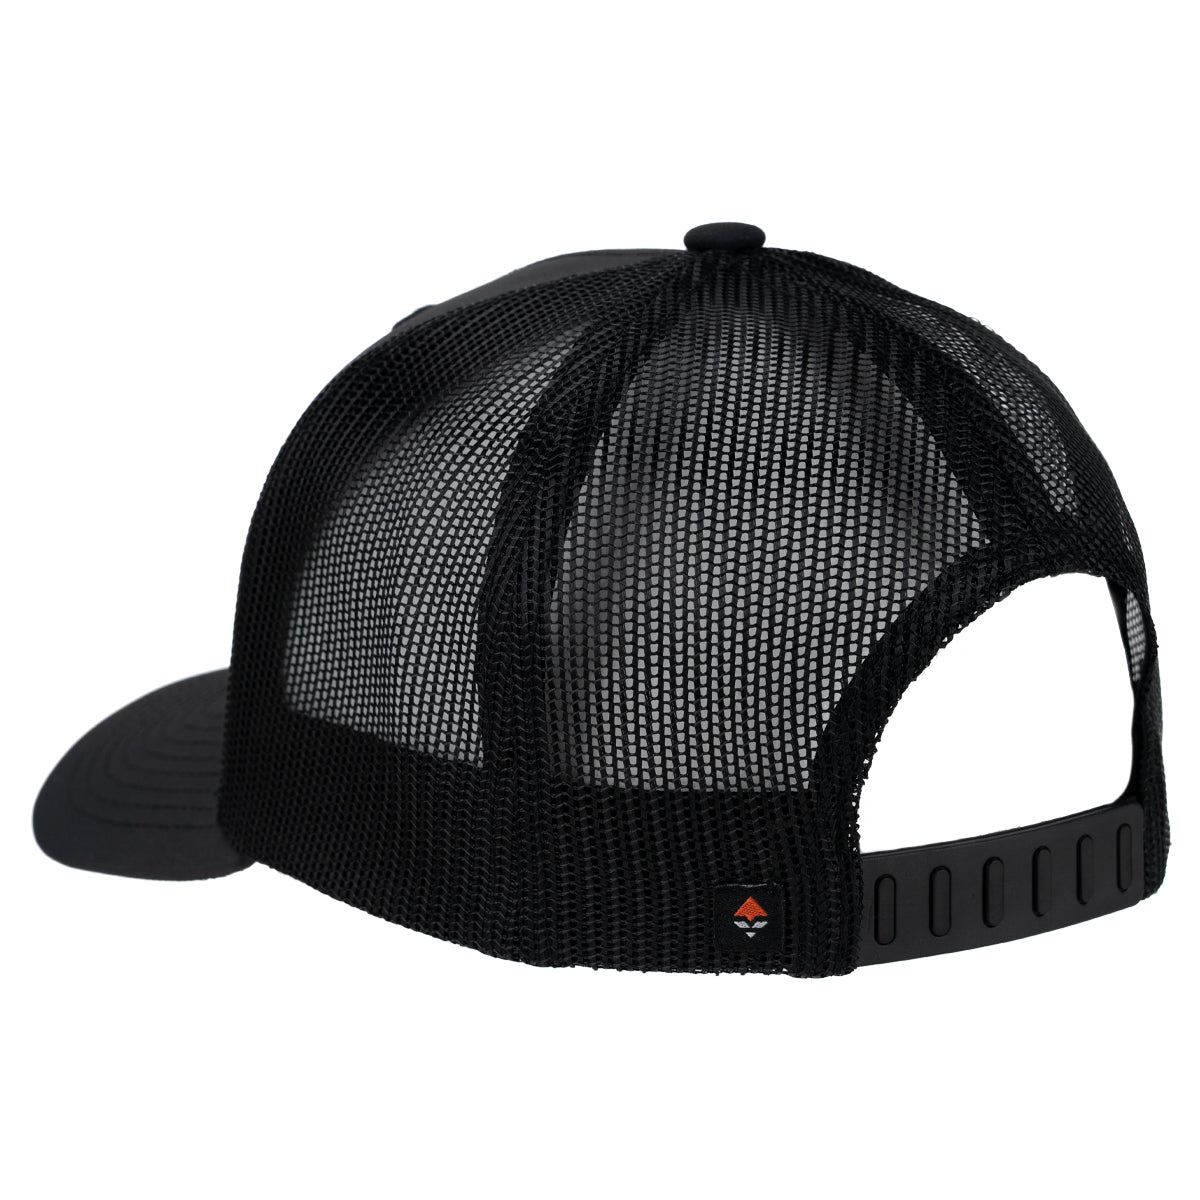 GOHUNT Certified Hat in Black by GOHUNT | GOHUNT - GOHUNT Shop